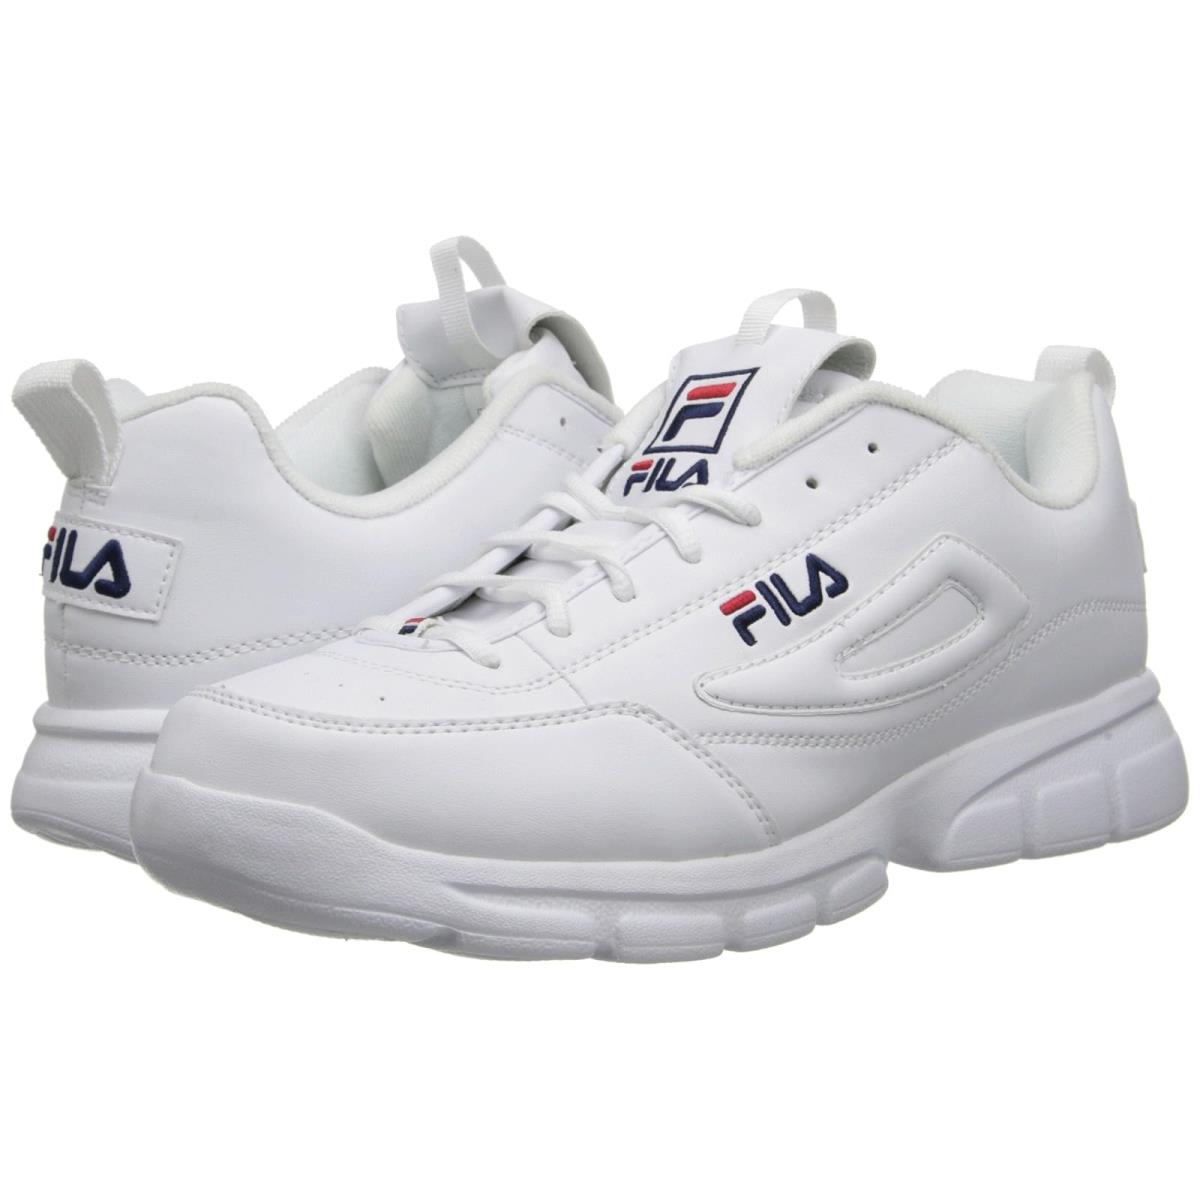 Man`s Sneakers Athletic Shoes Fila Disruptor Se White/Fila Navy/Fila Red